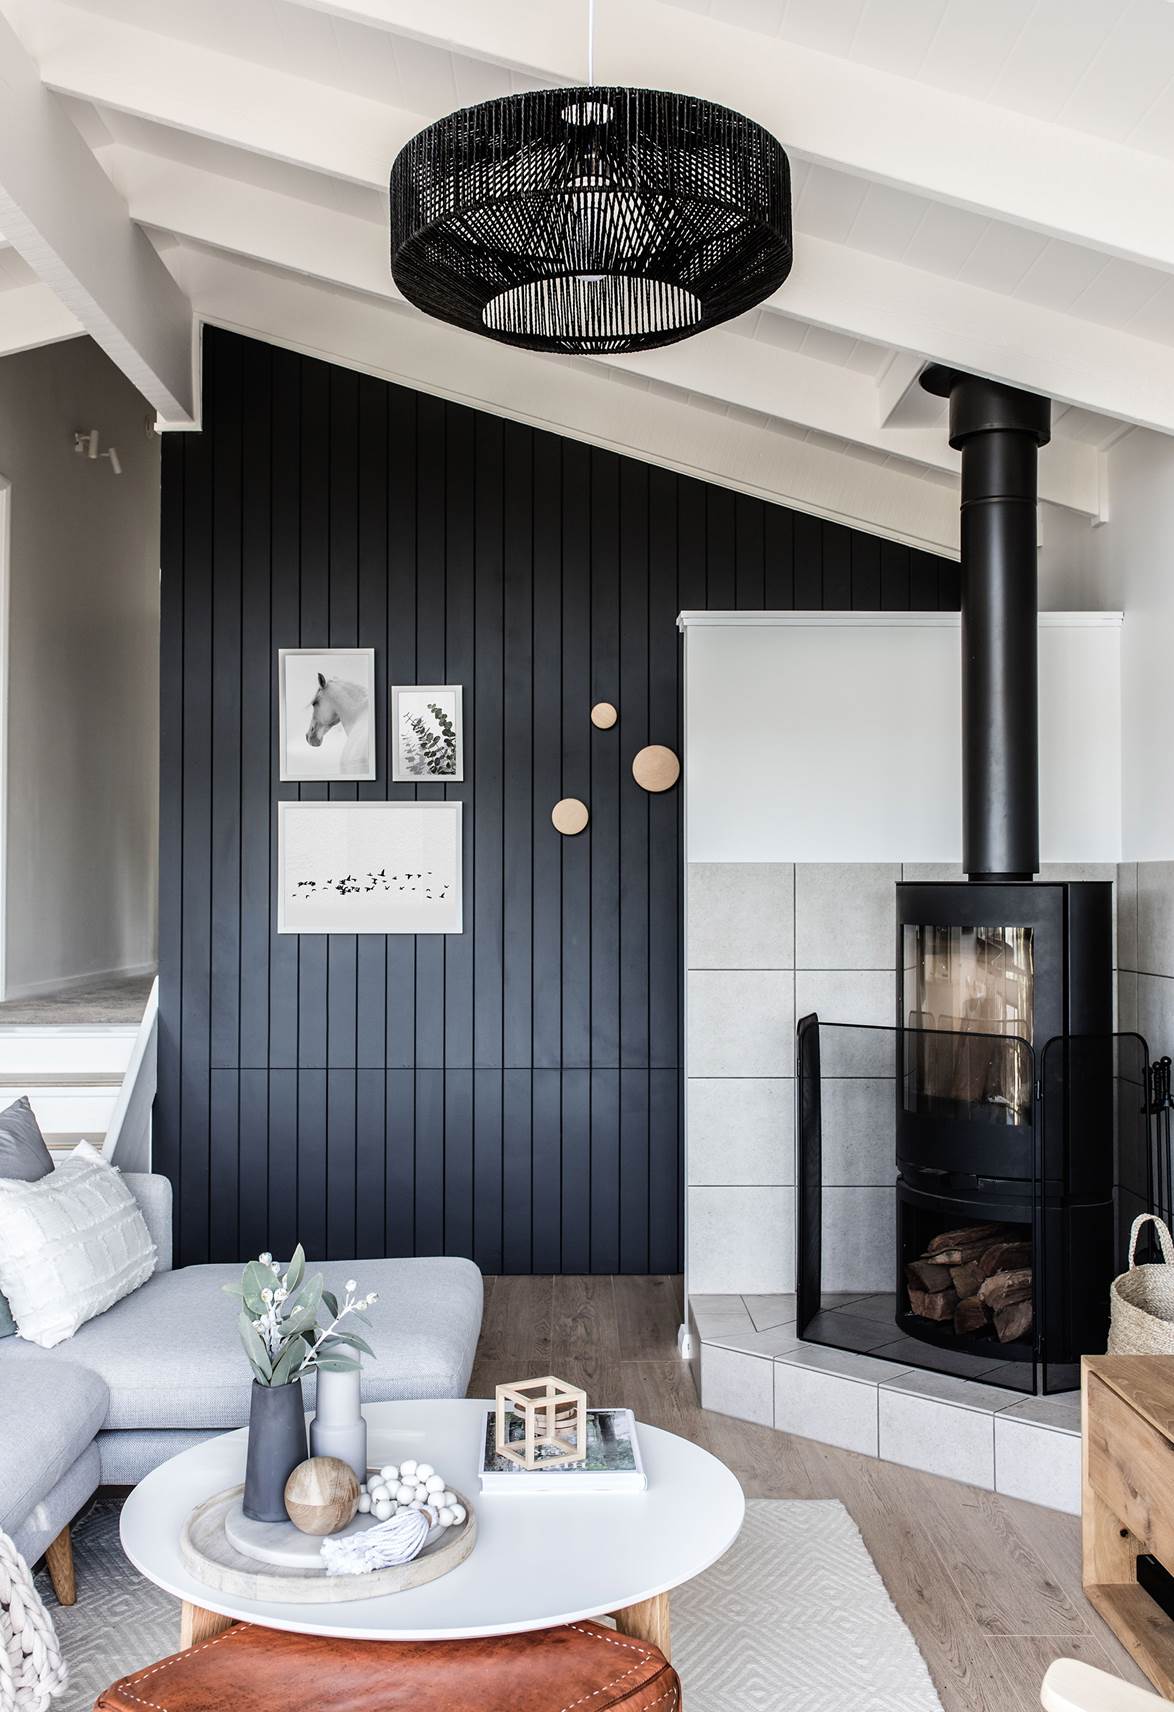 Black Futon Living Room Ideas - black futon living room ideas